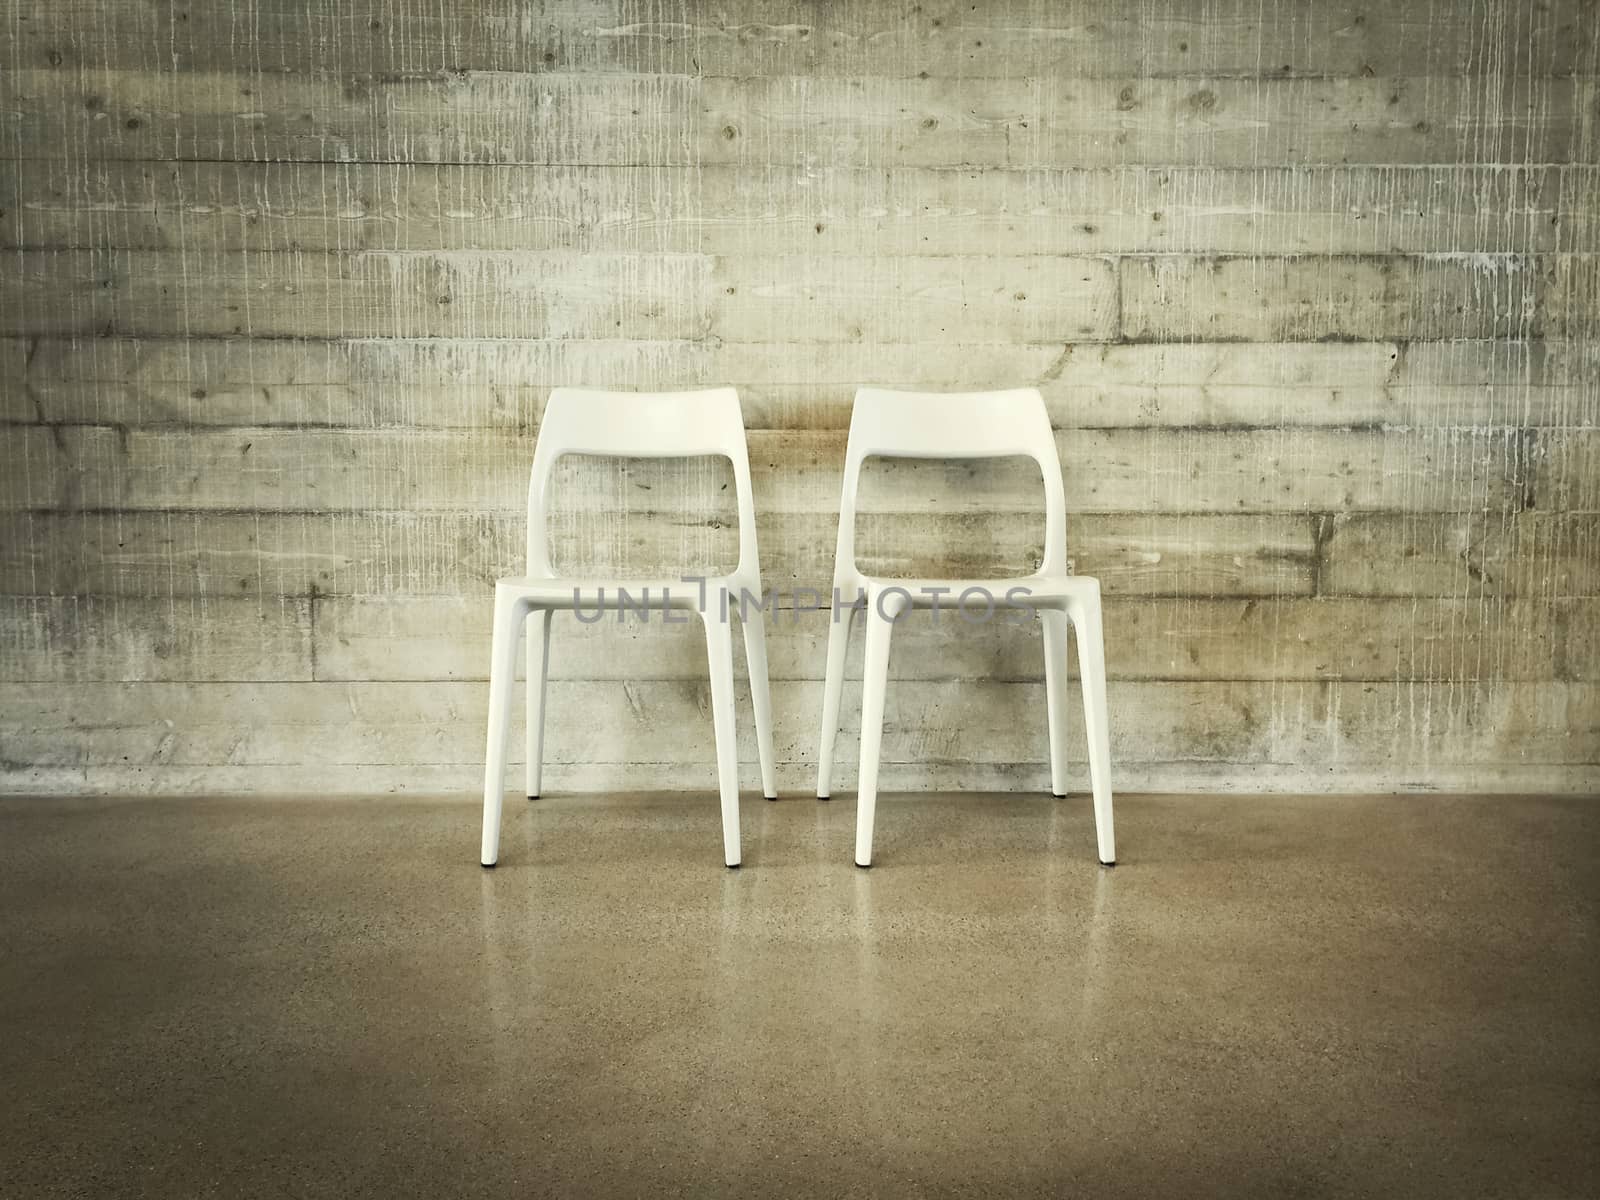 White chairs near concrete wall, modern industrial design.